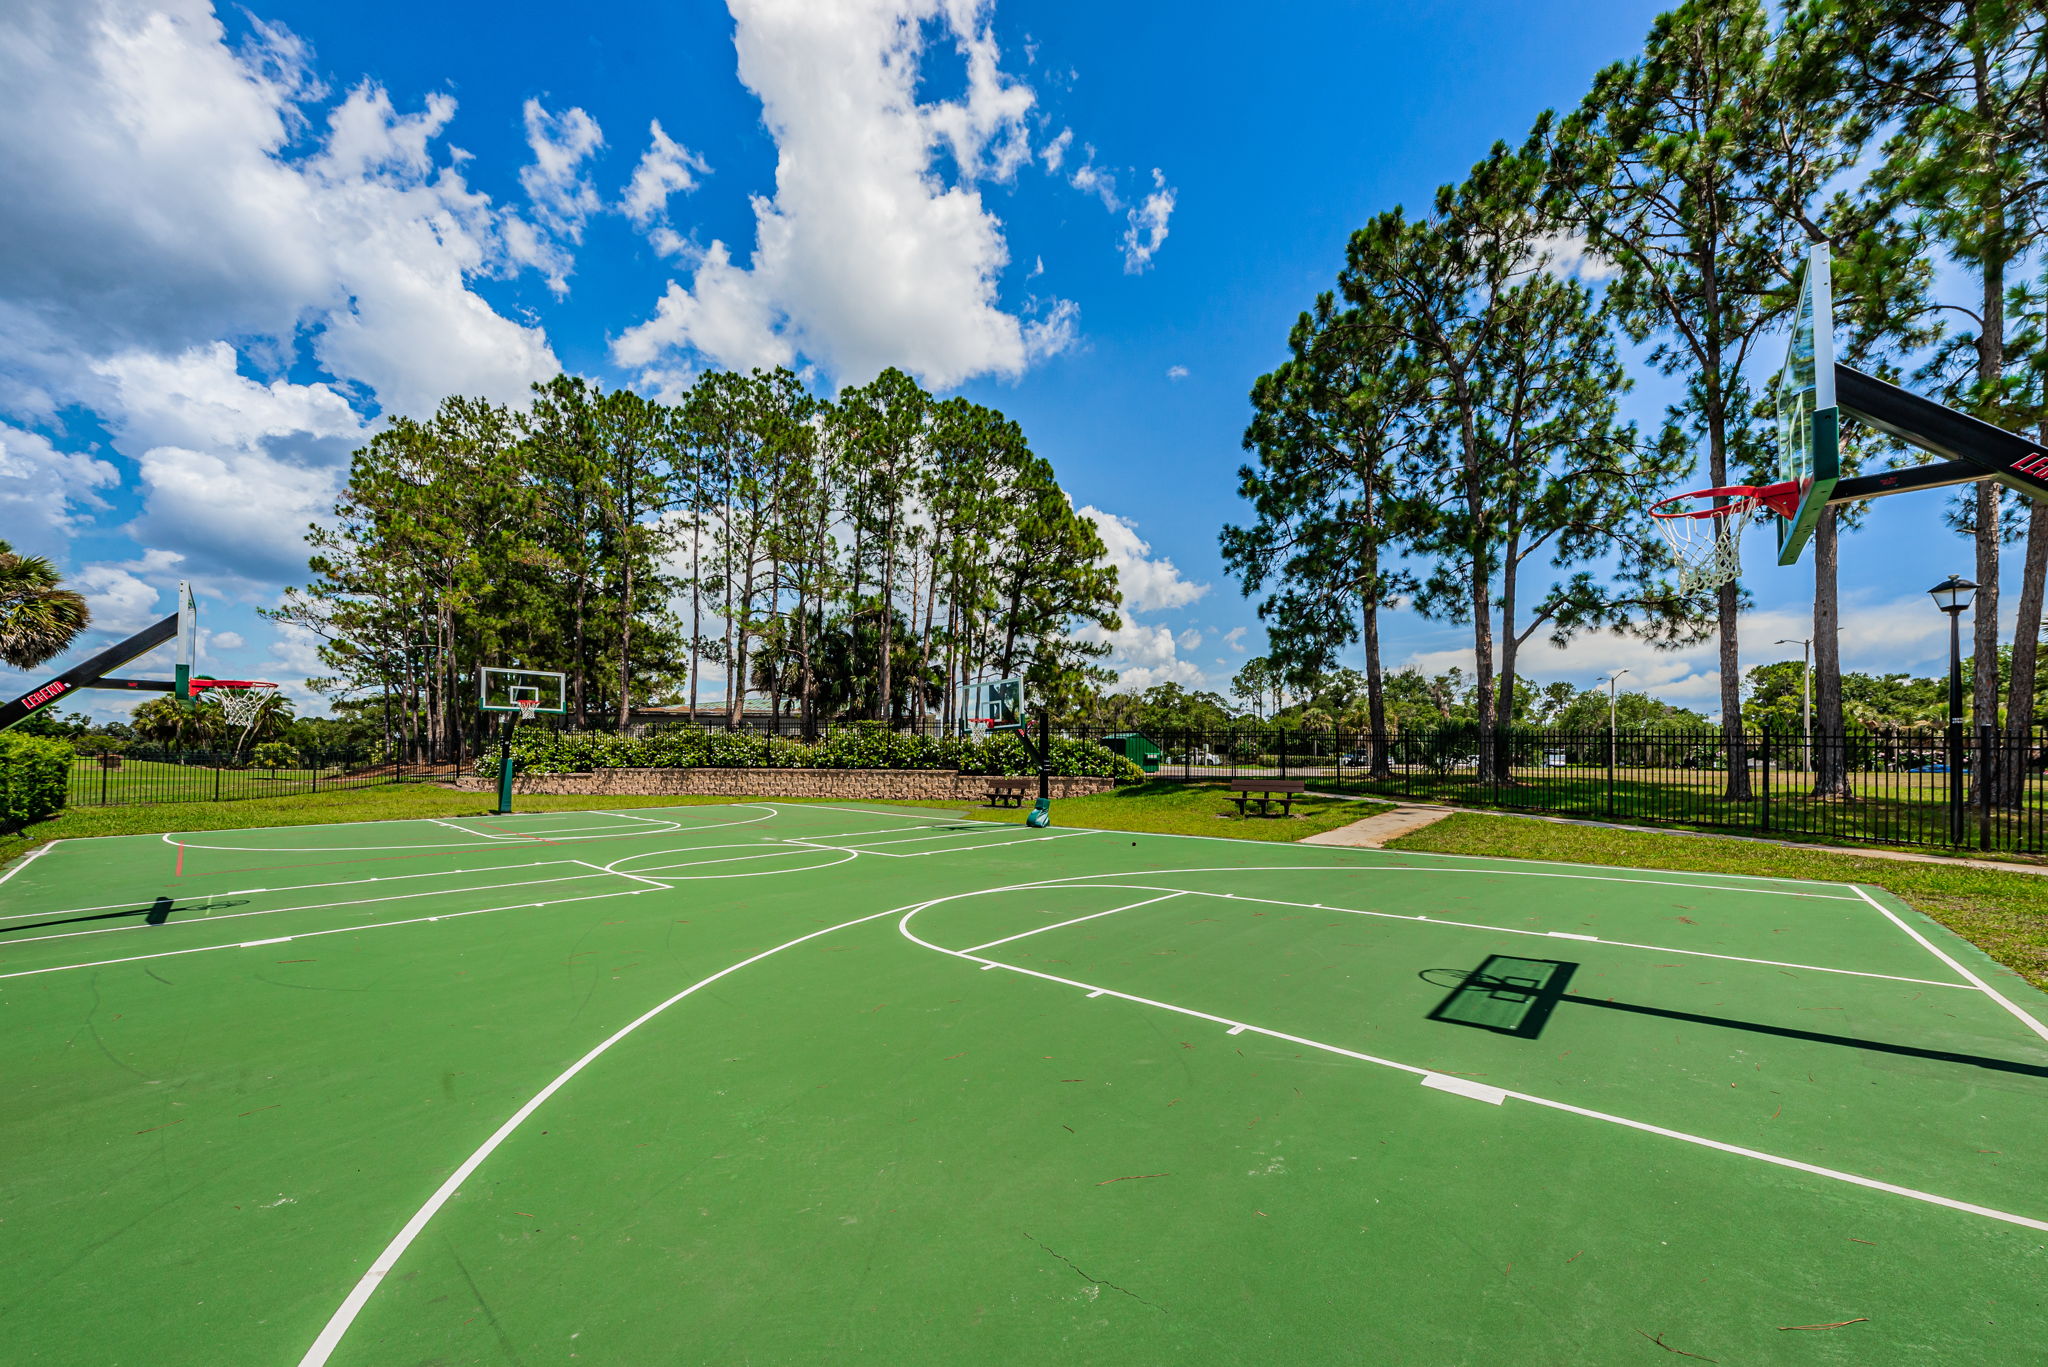 Basketball Court3